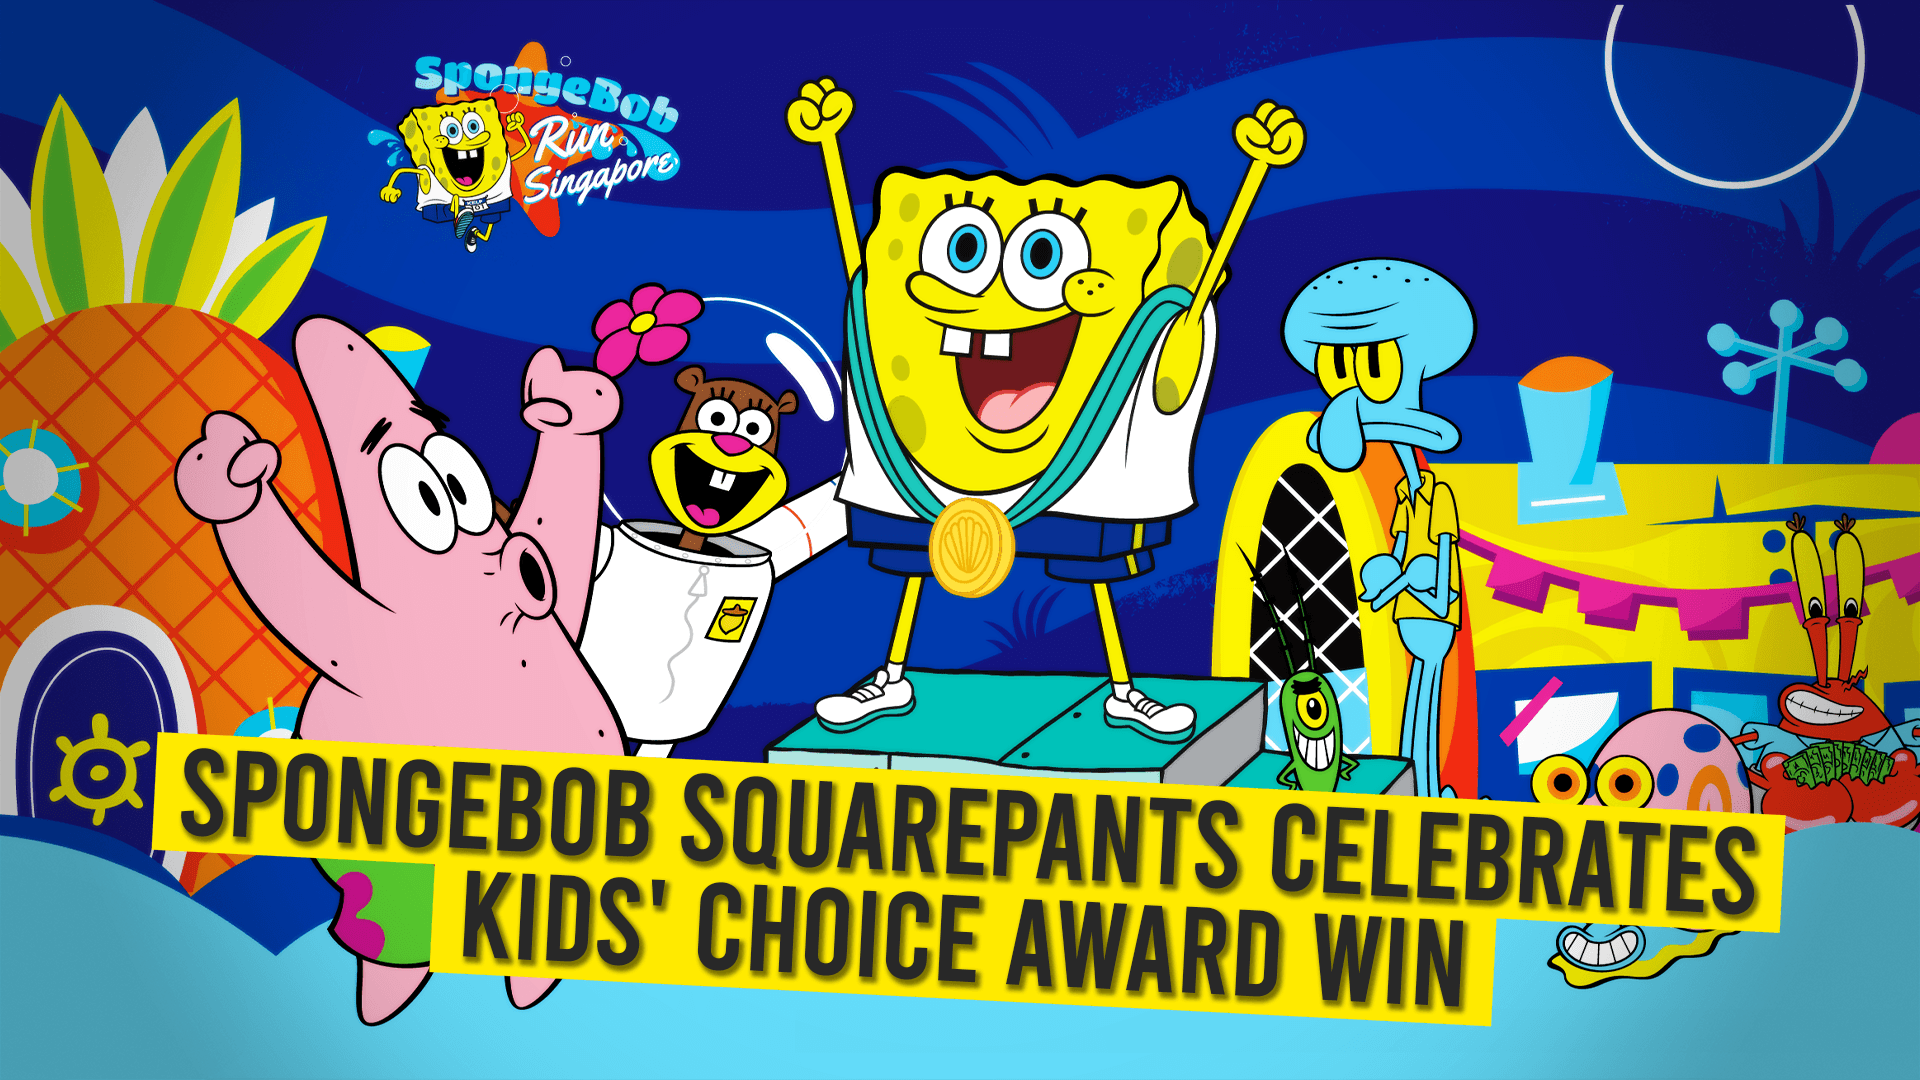 SpongeBob SquarePants Celebrates Kids’ Choice Award Win